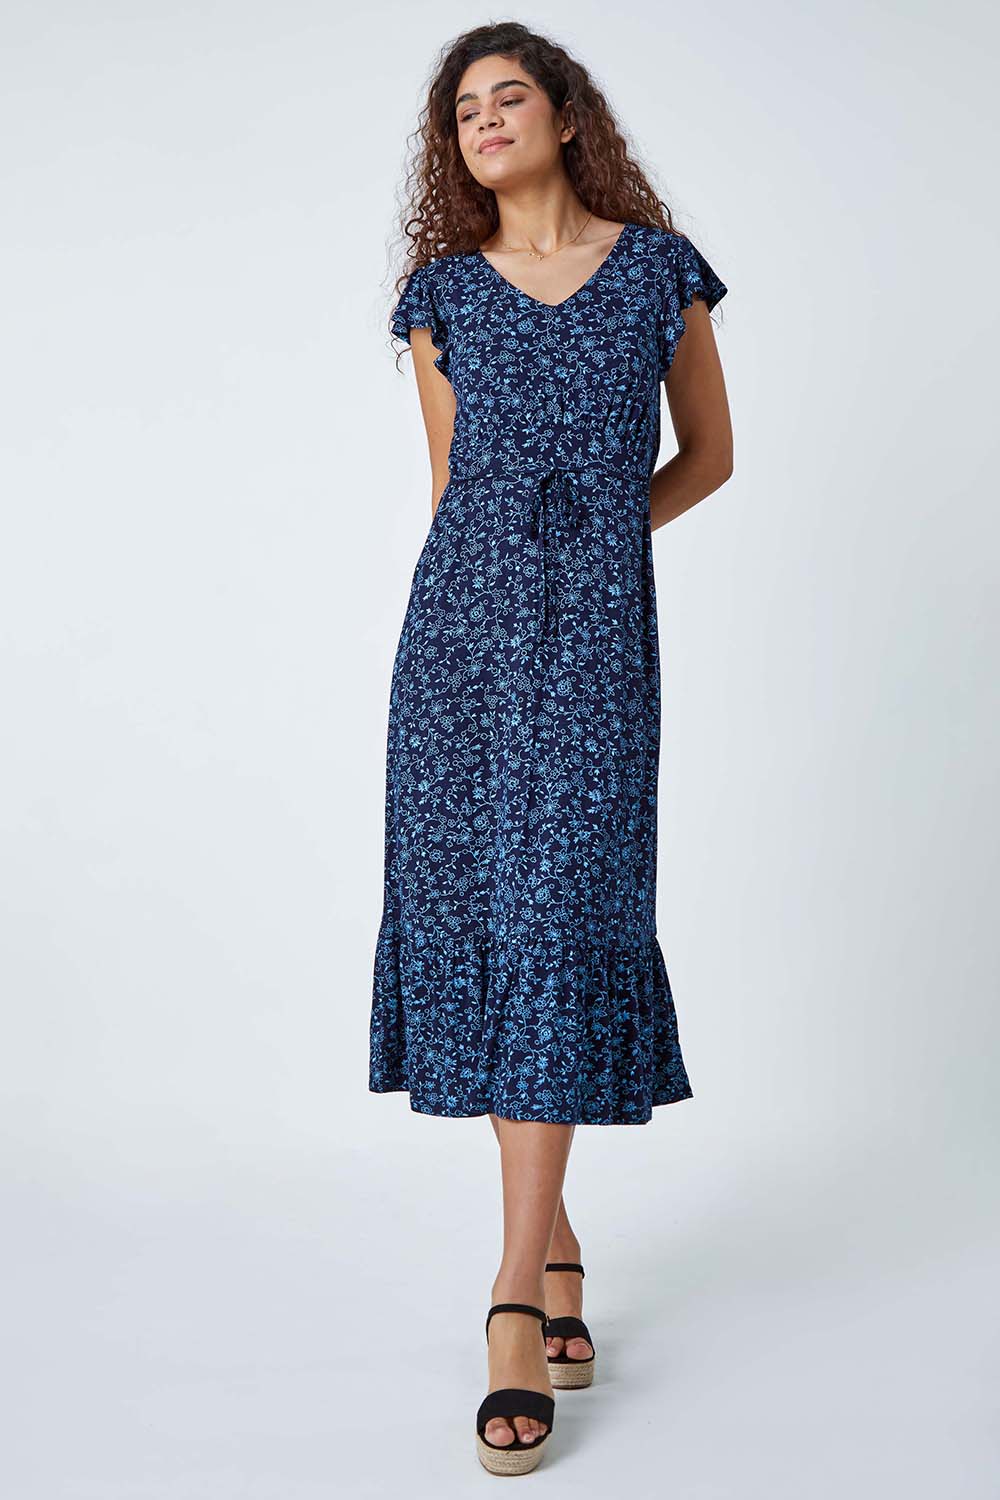 Blue Floral Print Frill Midi Stretch Dress, Image 2 of 5